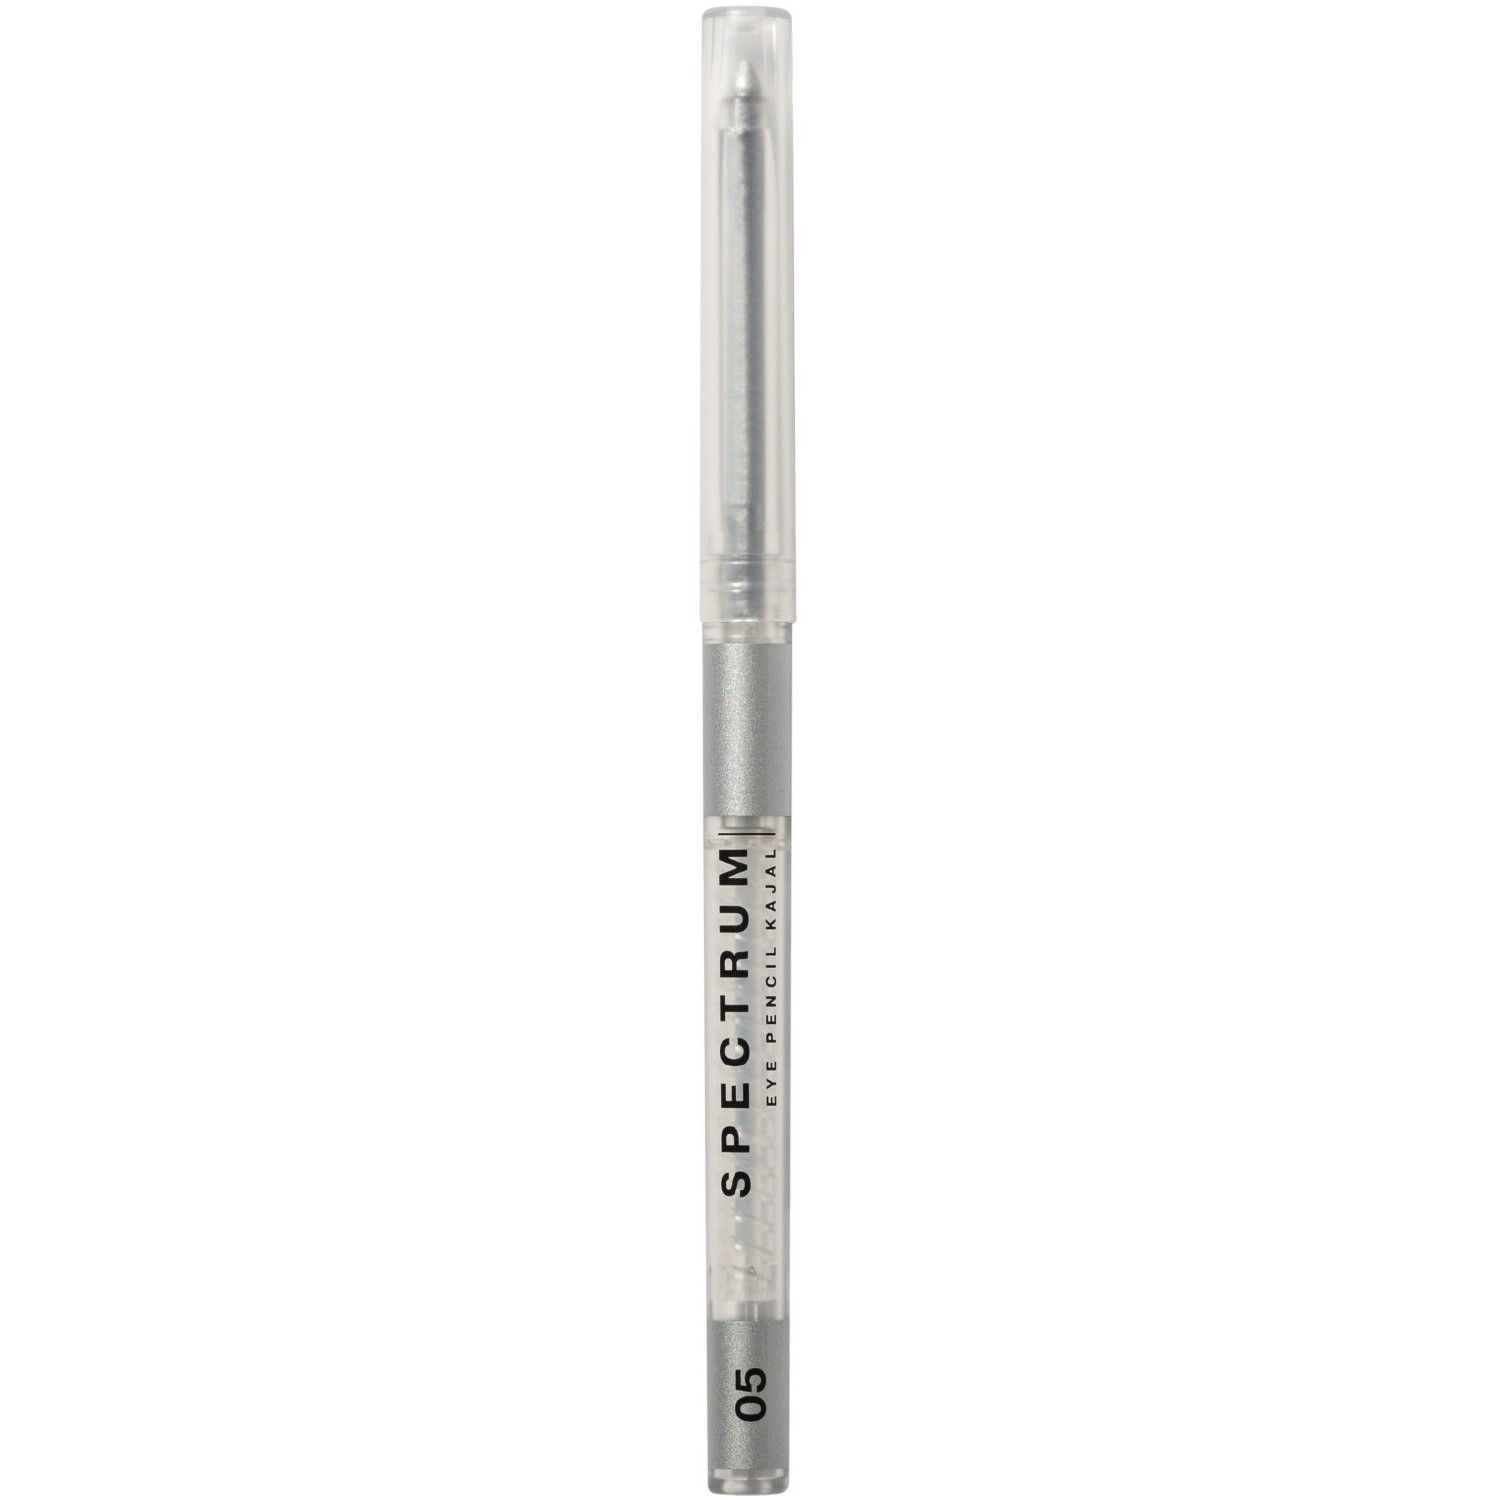 Карандаш для глаз Influence Beauty Spectrum автоматический, гелевый тон 05 0,28 г карандаш для глаз influence beauty spectrum автоматический гелевый тон 12 0 28 г